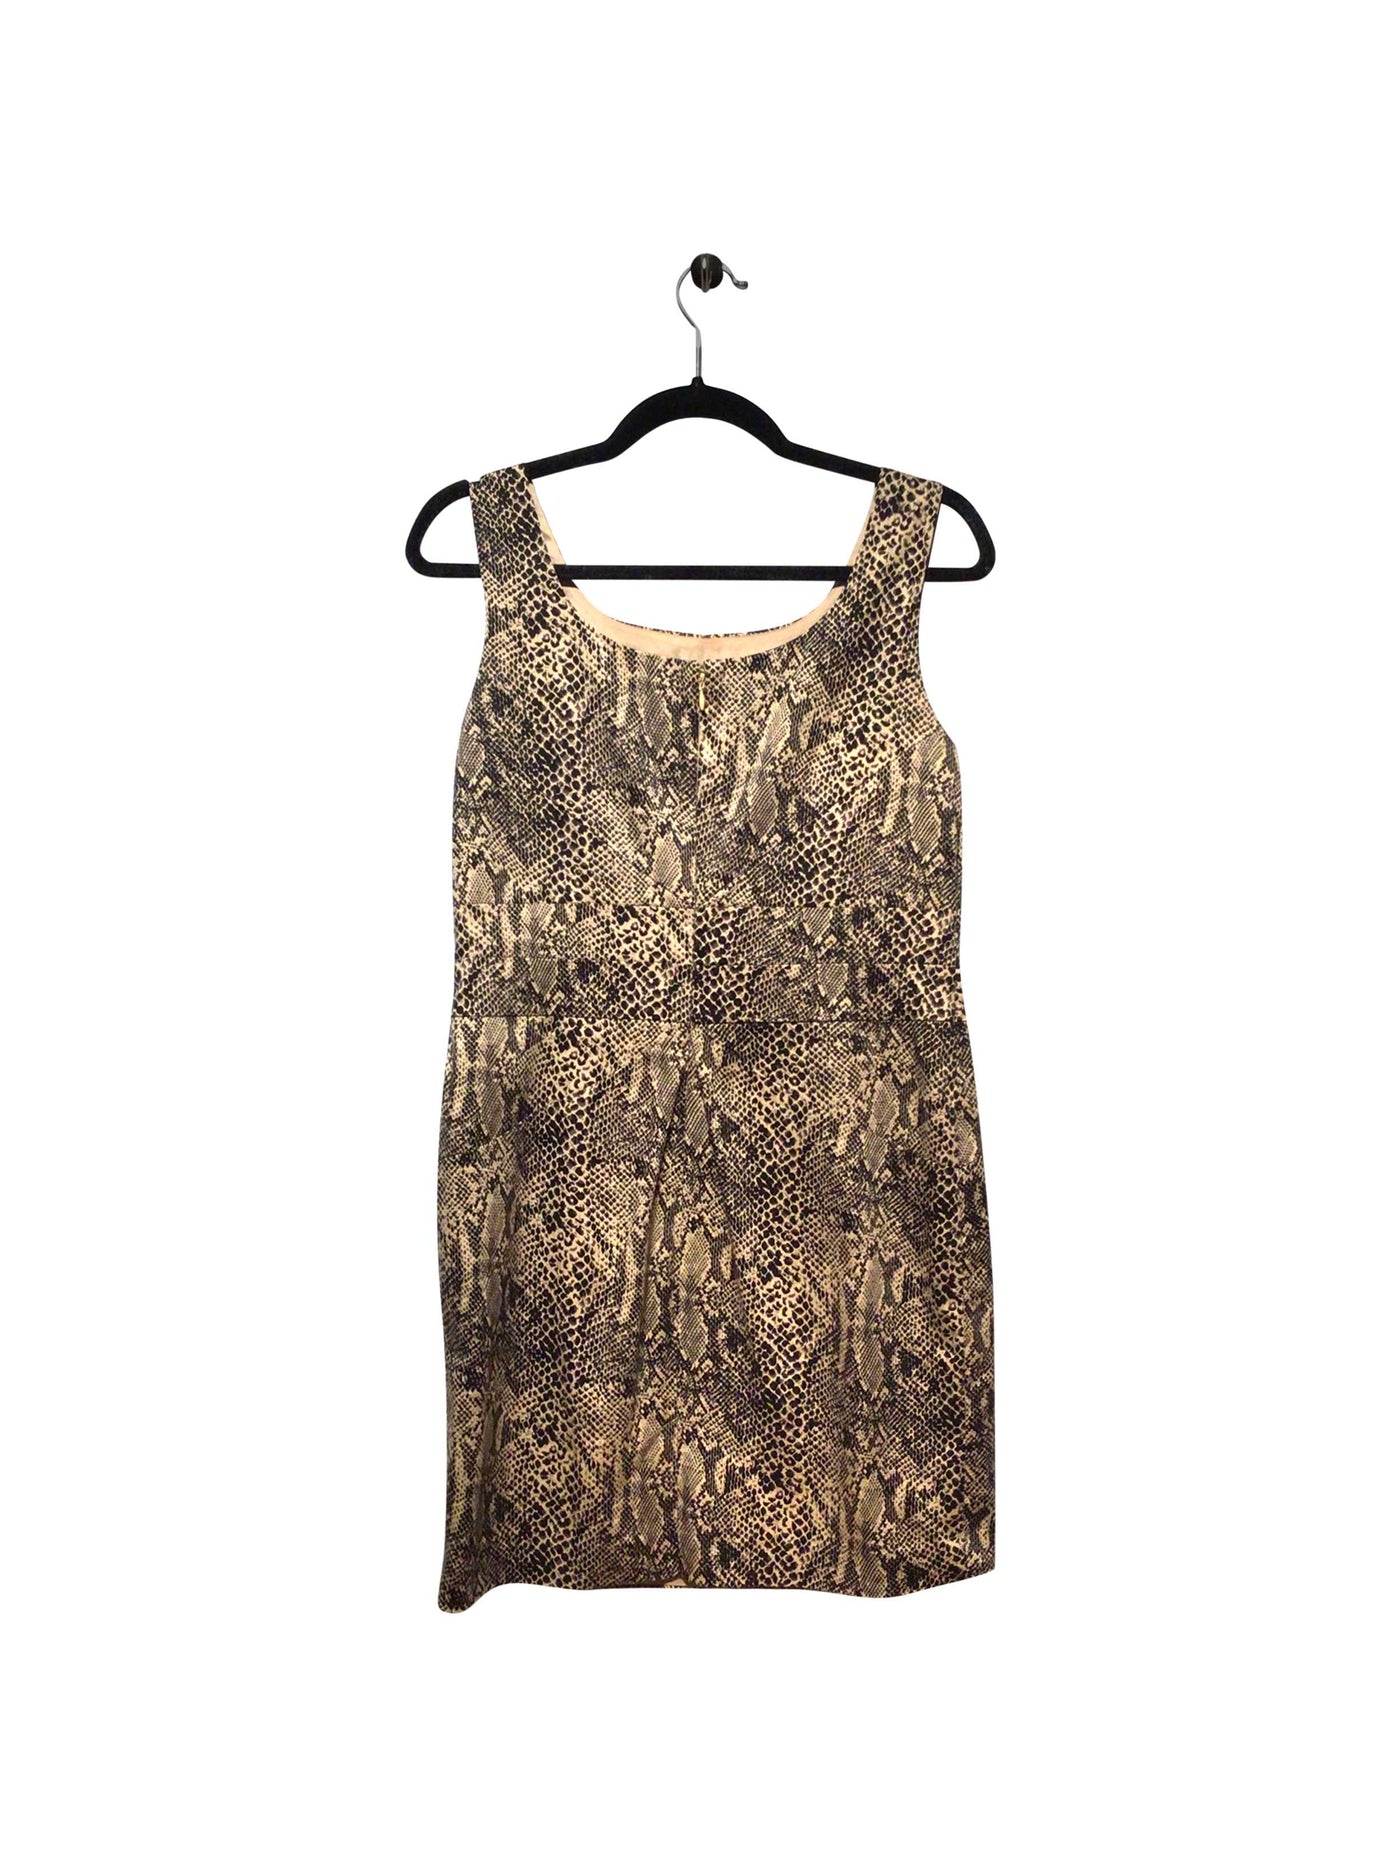 MICHAEL KORS Regular fit Mini Dress in Beige  -  8  55.45 Koop